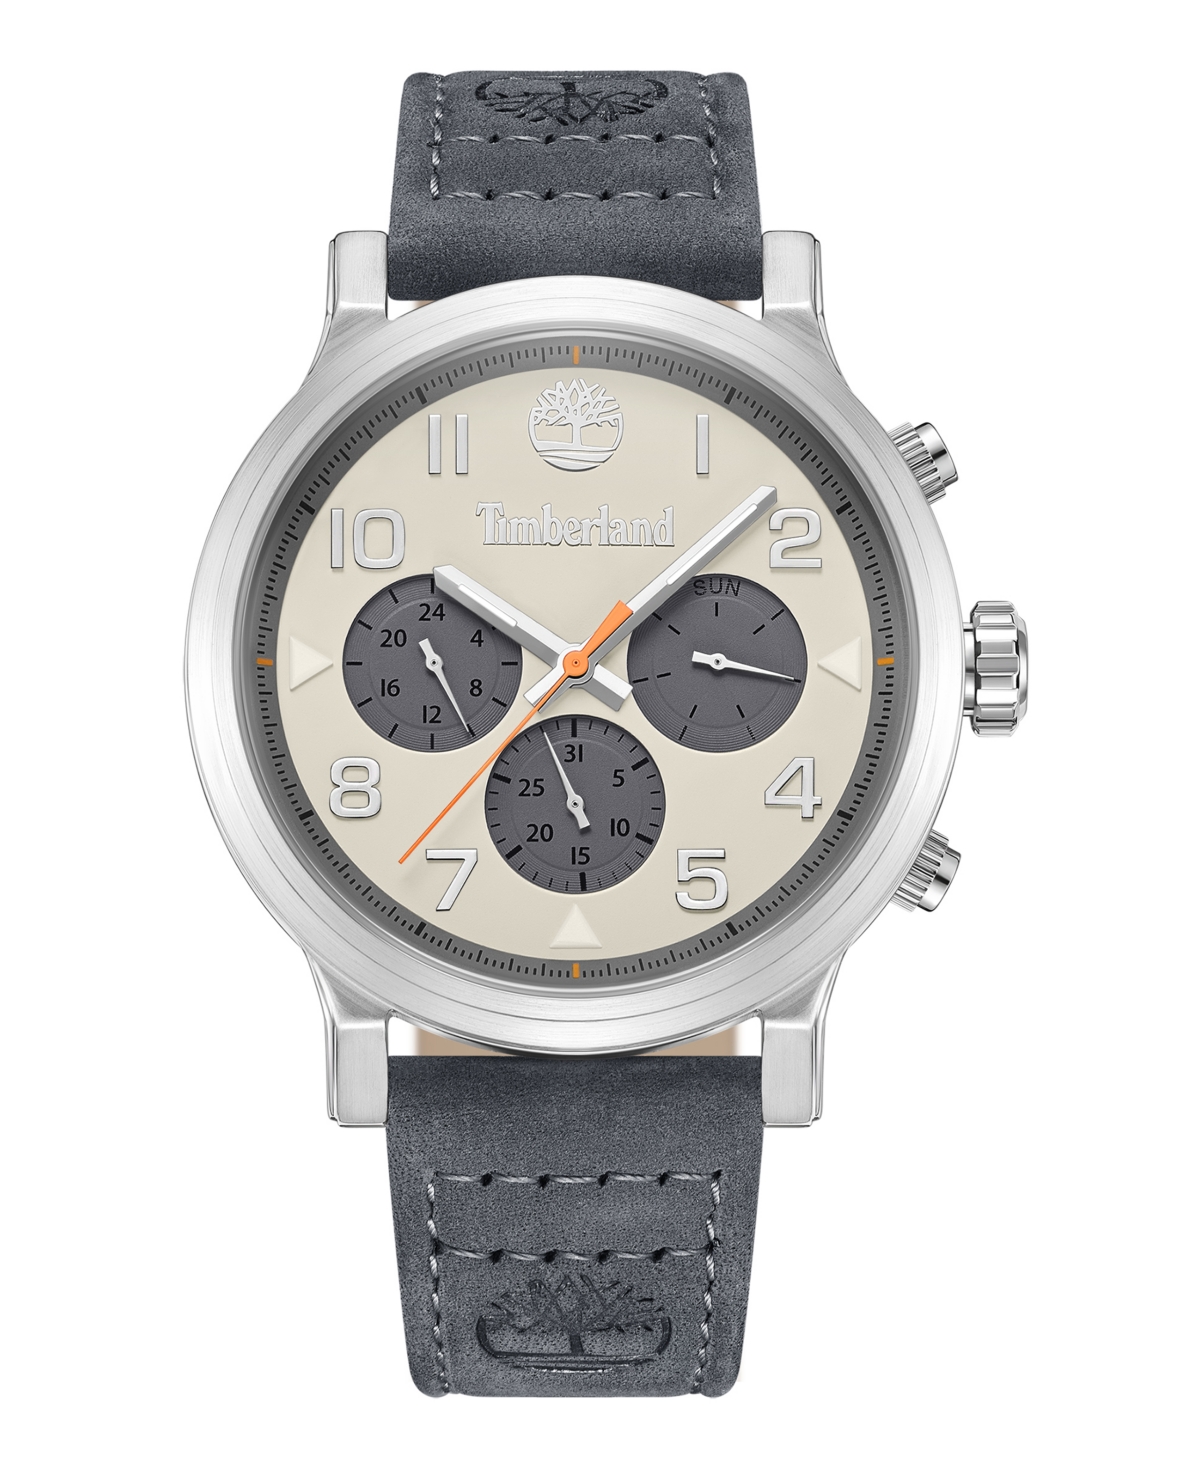 Men's Quartz Pancher Gray Genuine Leather Strap Watch, 46mm - Gray